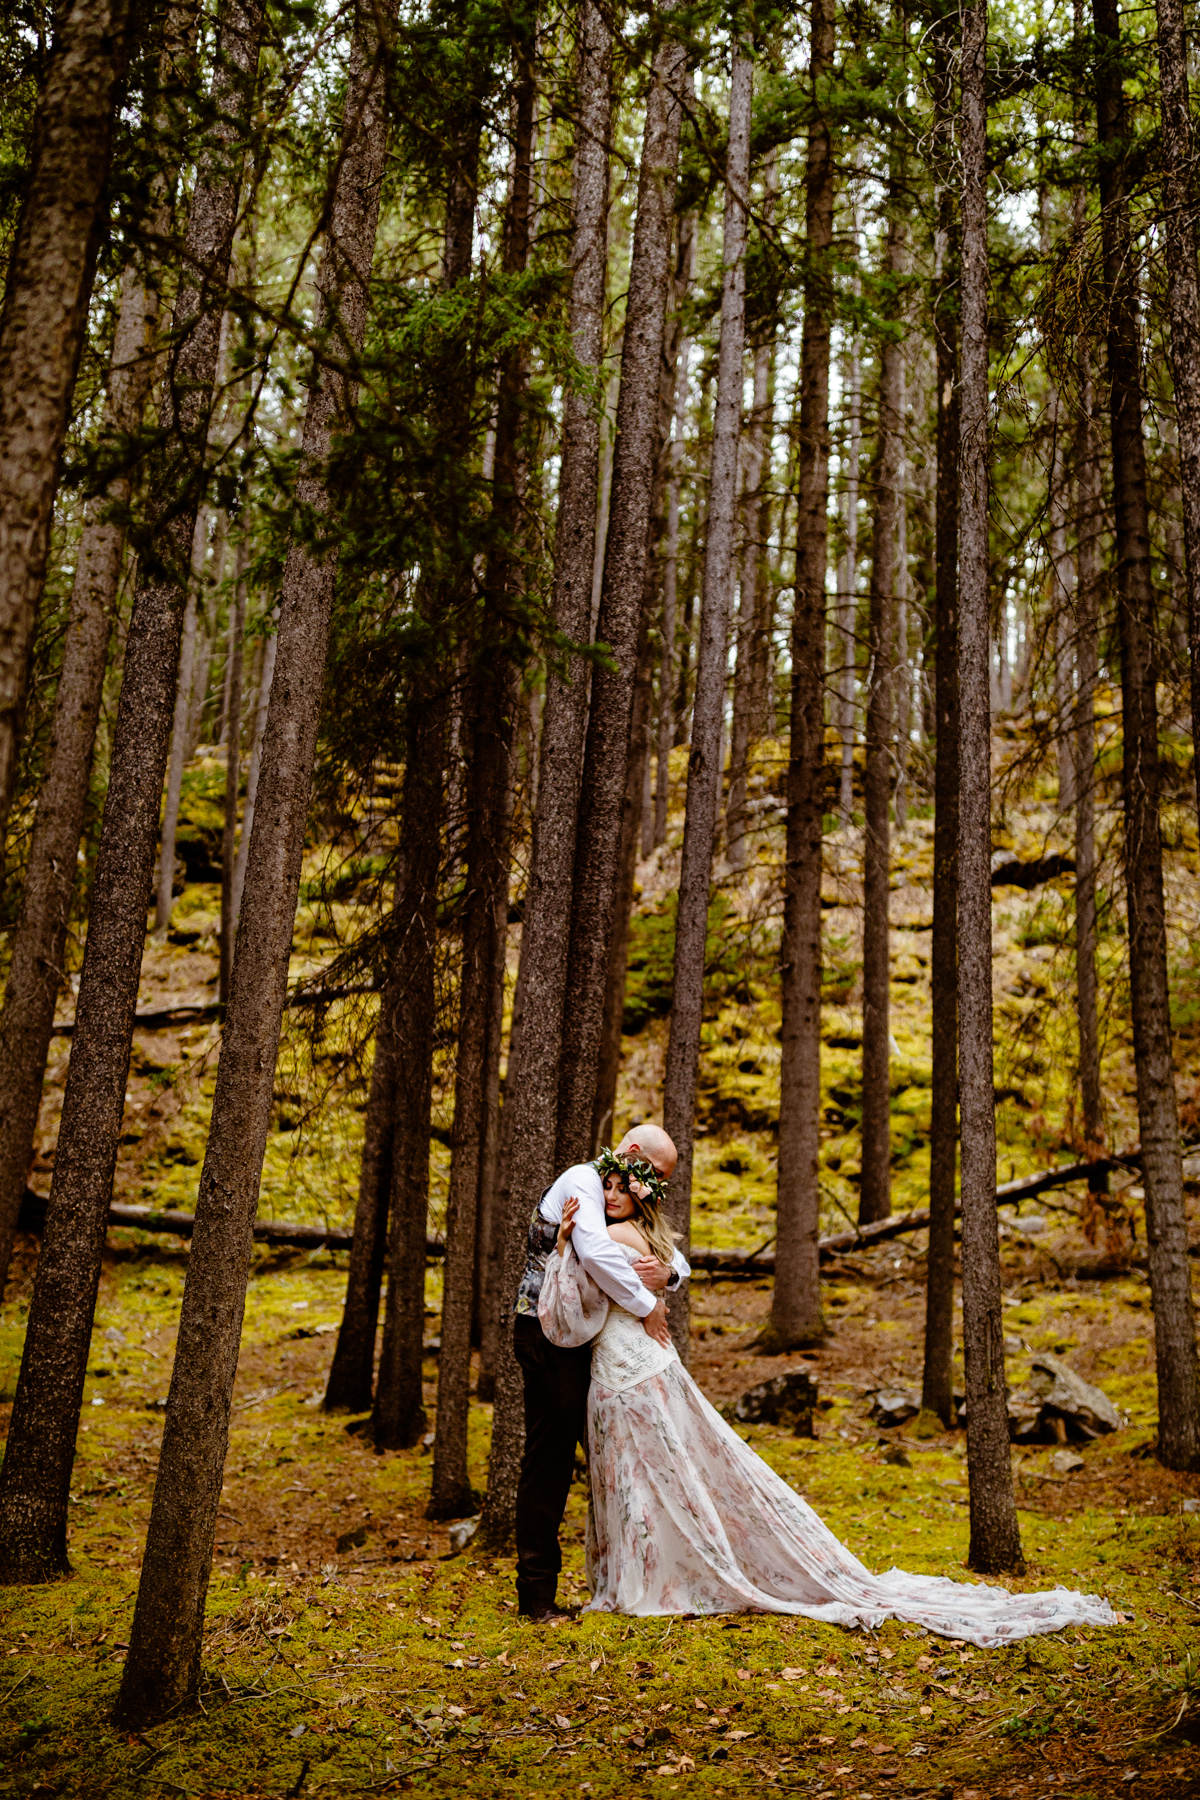 Stormy and Rainy Banff Wedding Photography - Photo 31